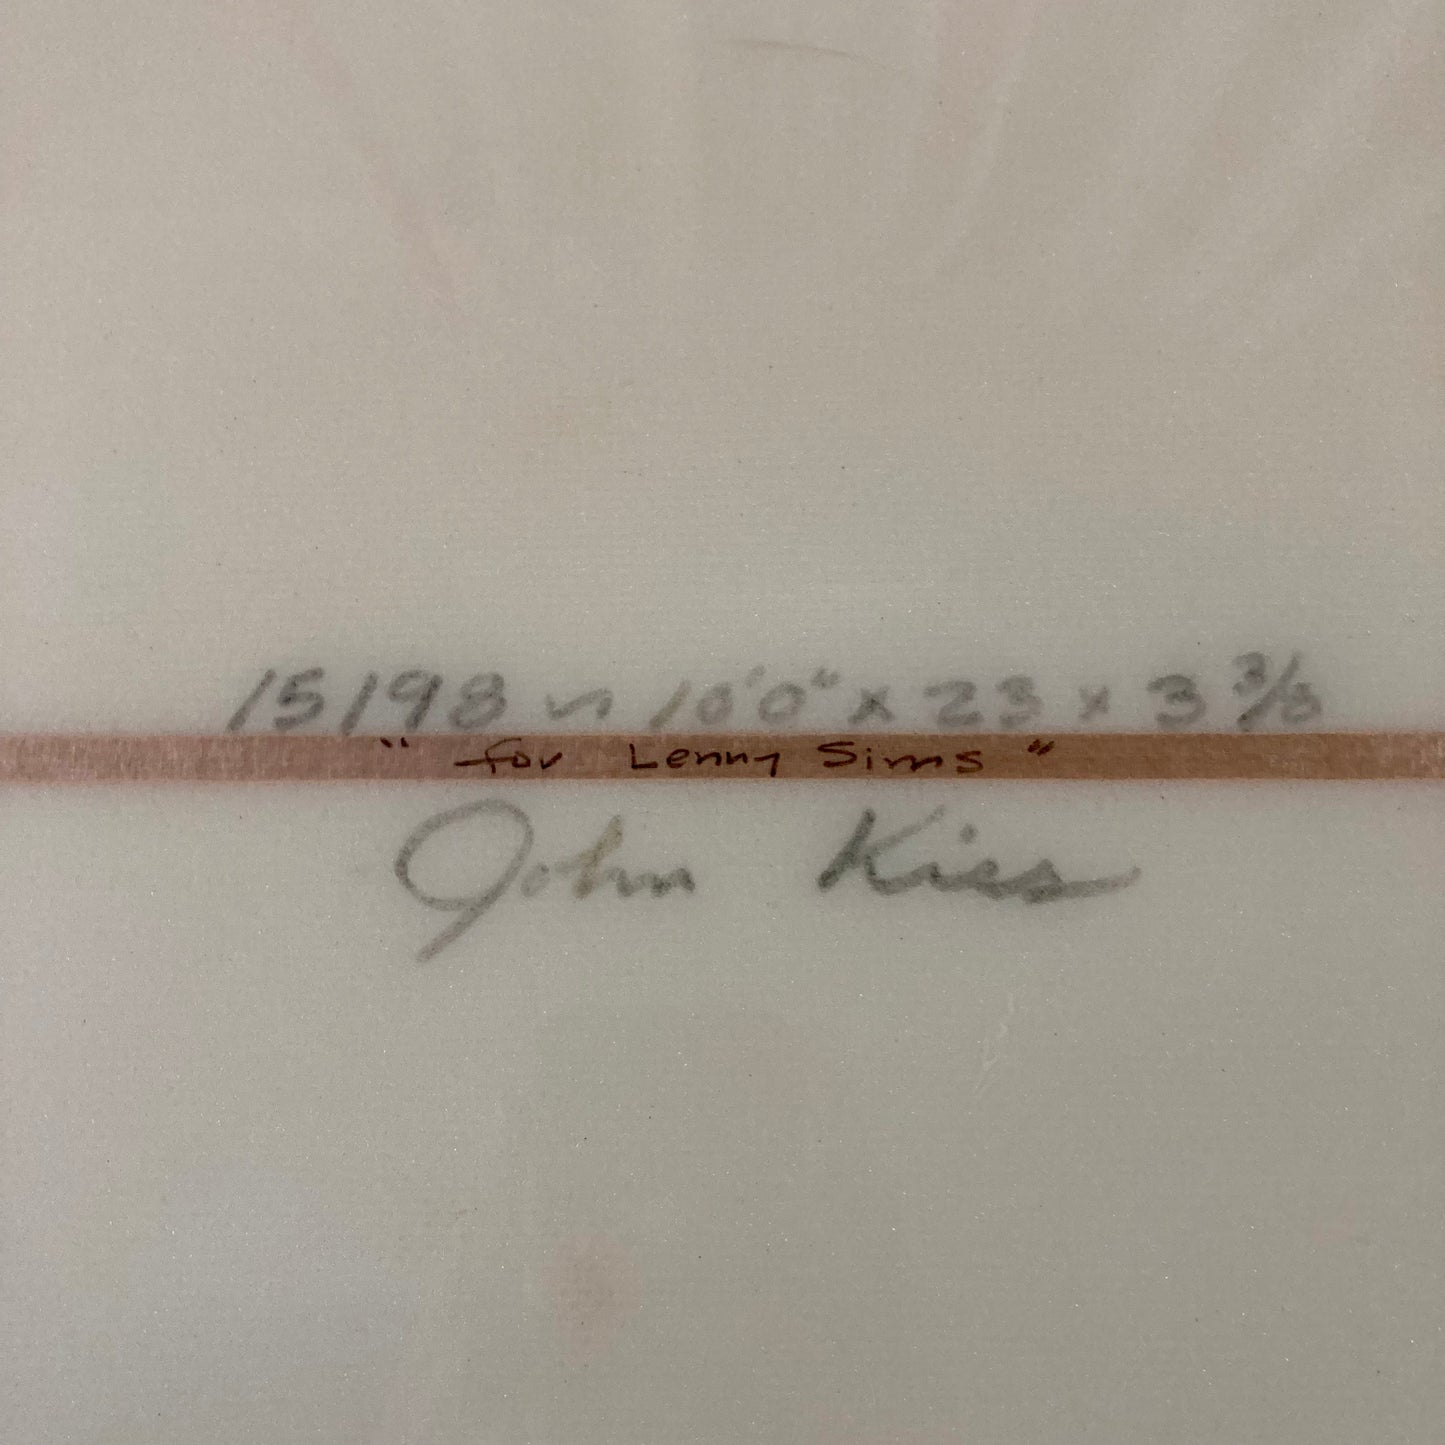 Used Kies - 10'0" Longboard